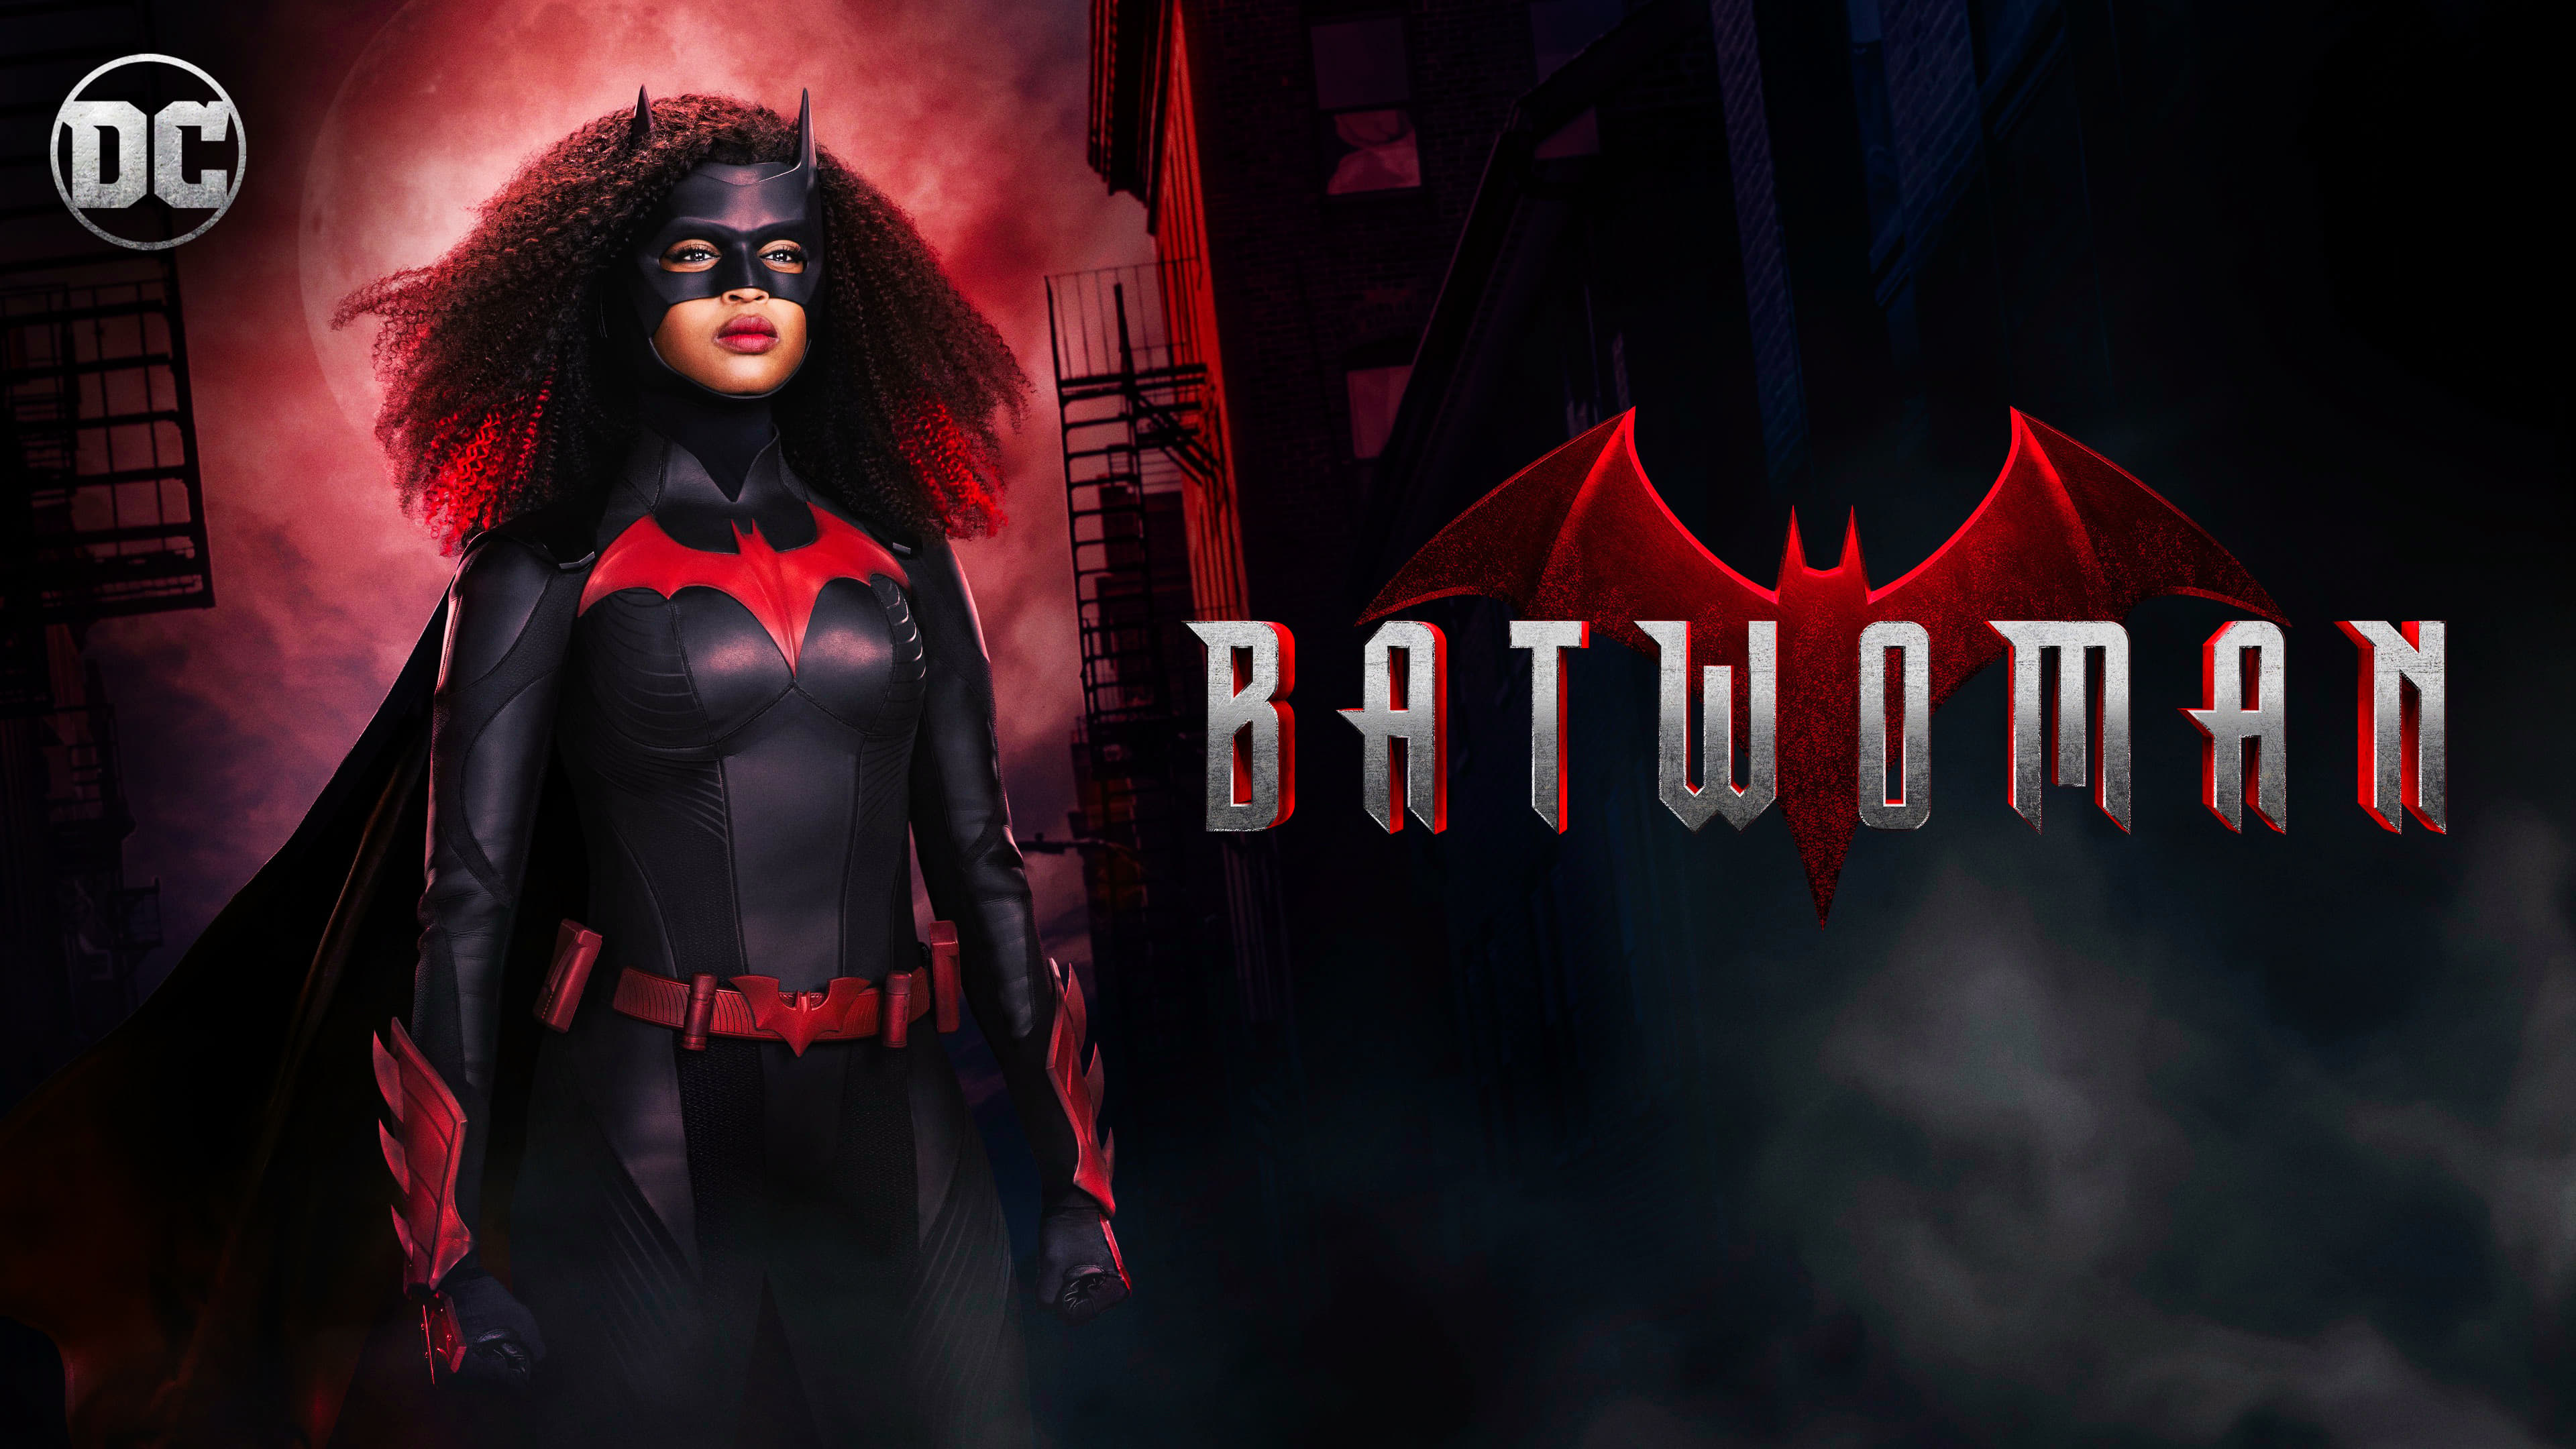 Baixar papel de parede para celular de Programa De Tv, Batwoman gratuito.